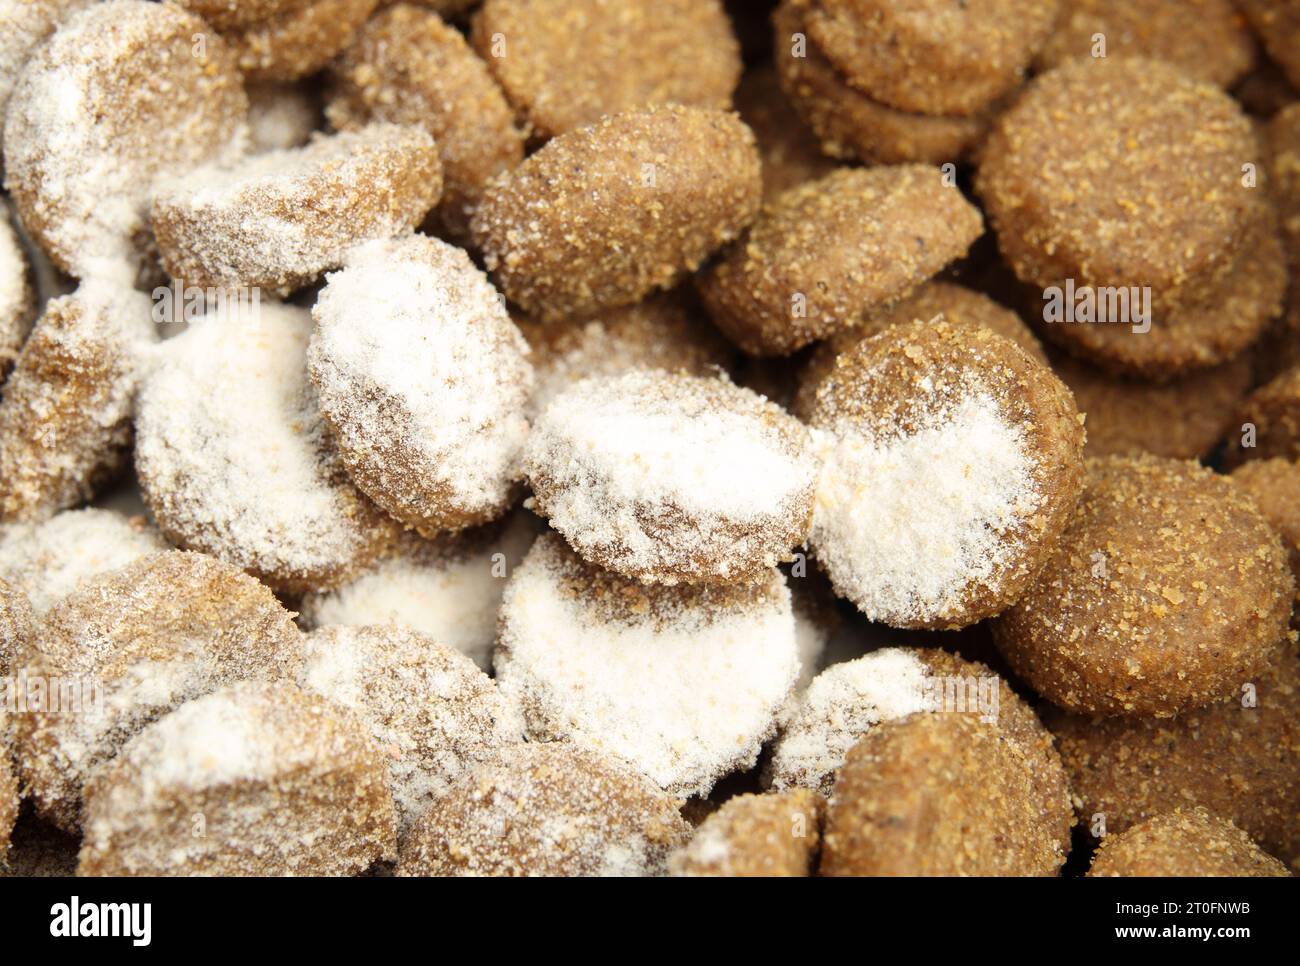 Medication in kibbles or pet food. White powder sprinkled over food for cat or dog. Administer medication, drug treatments, supplements, probiotics or Stock Photo